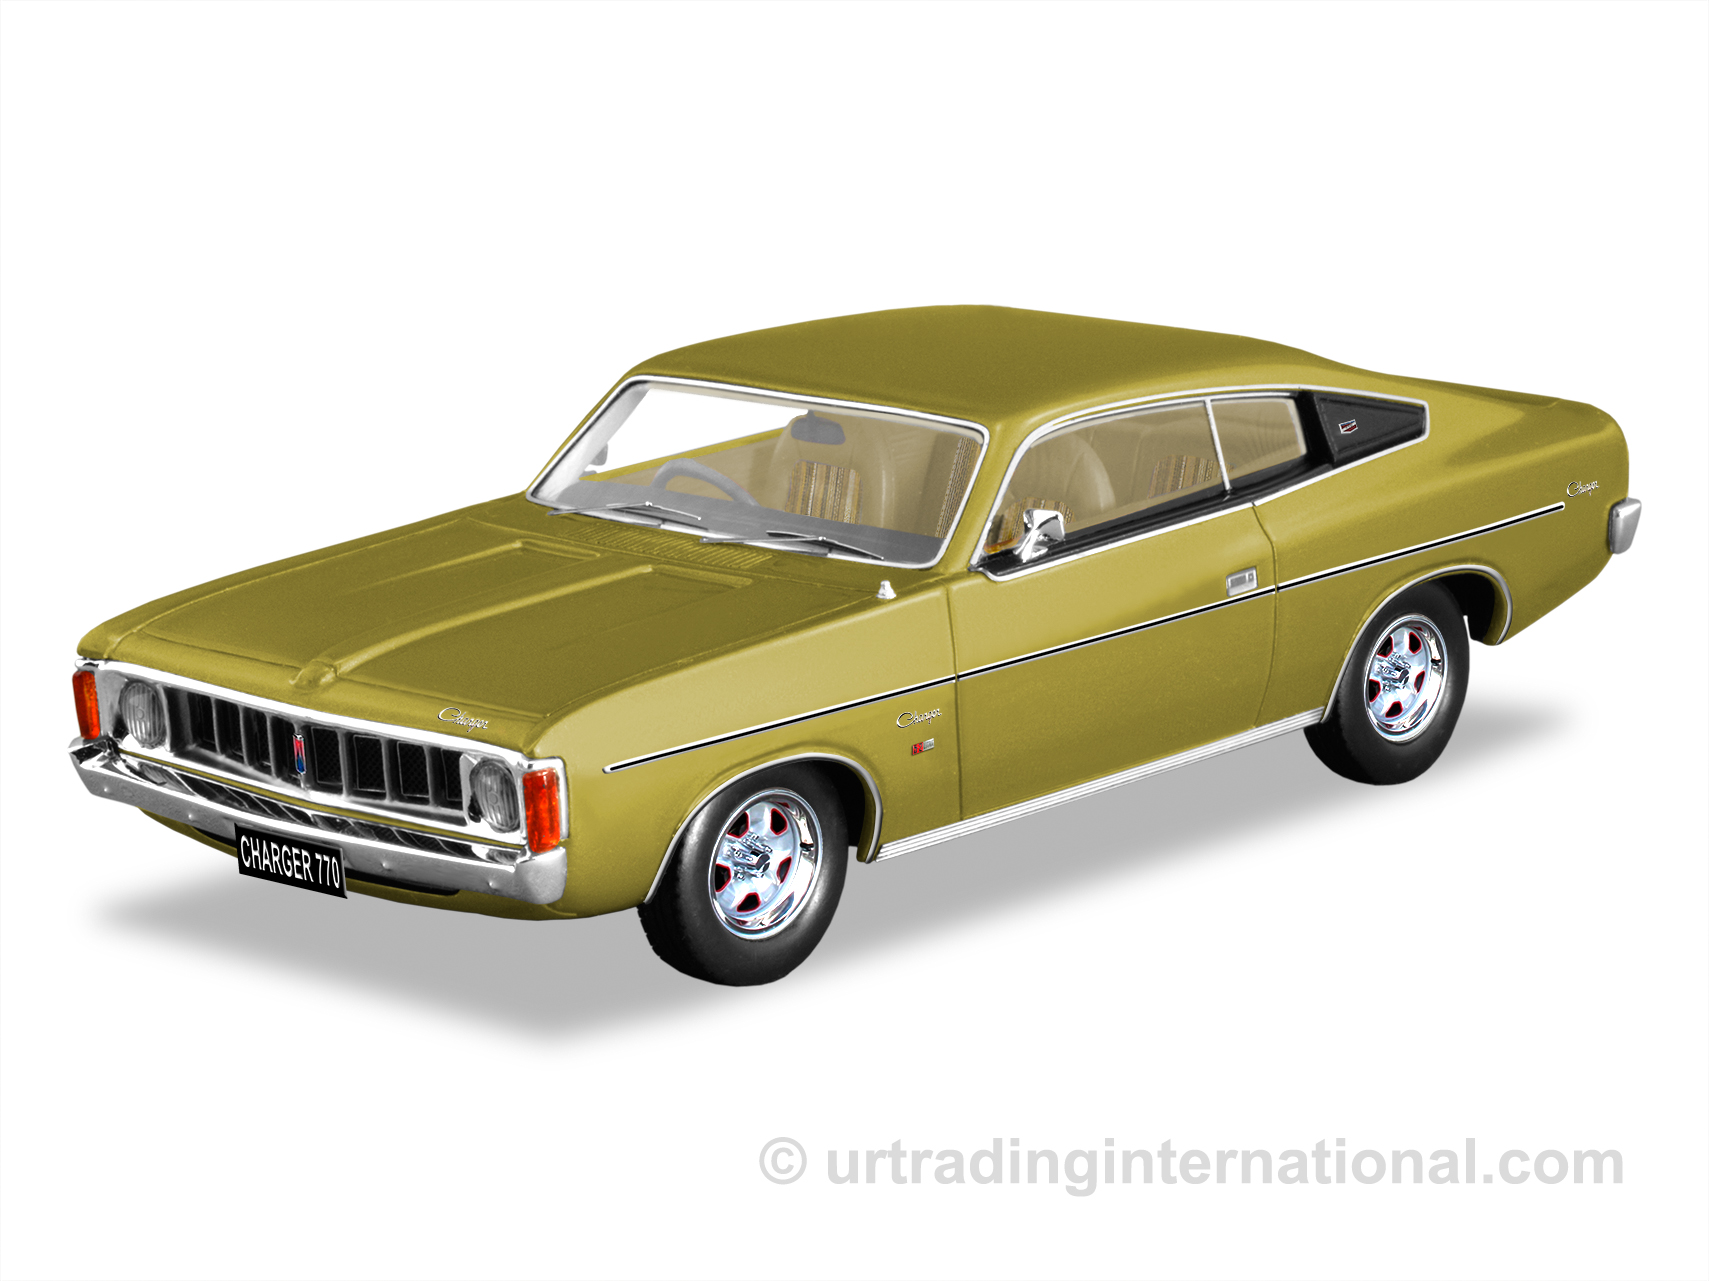 1975 VK Chrysler Charger 770 – Pampas Green